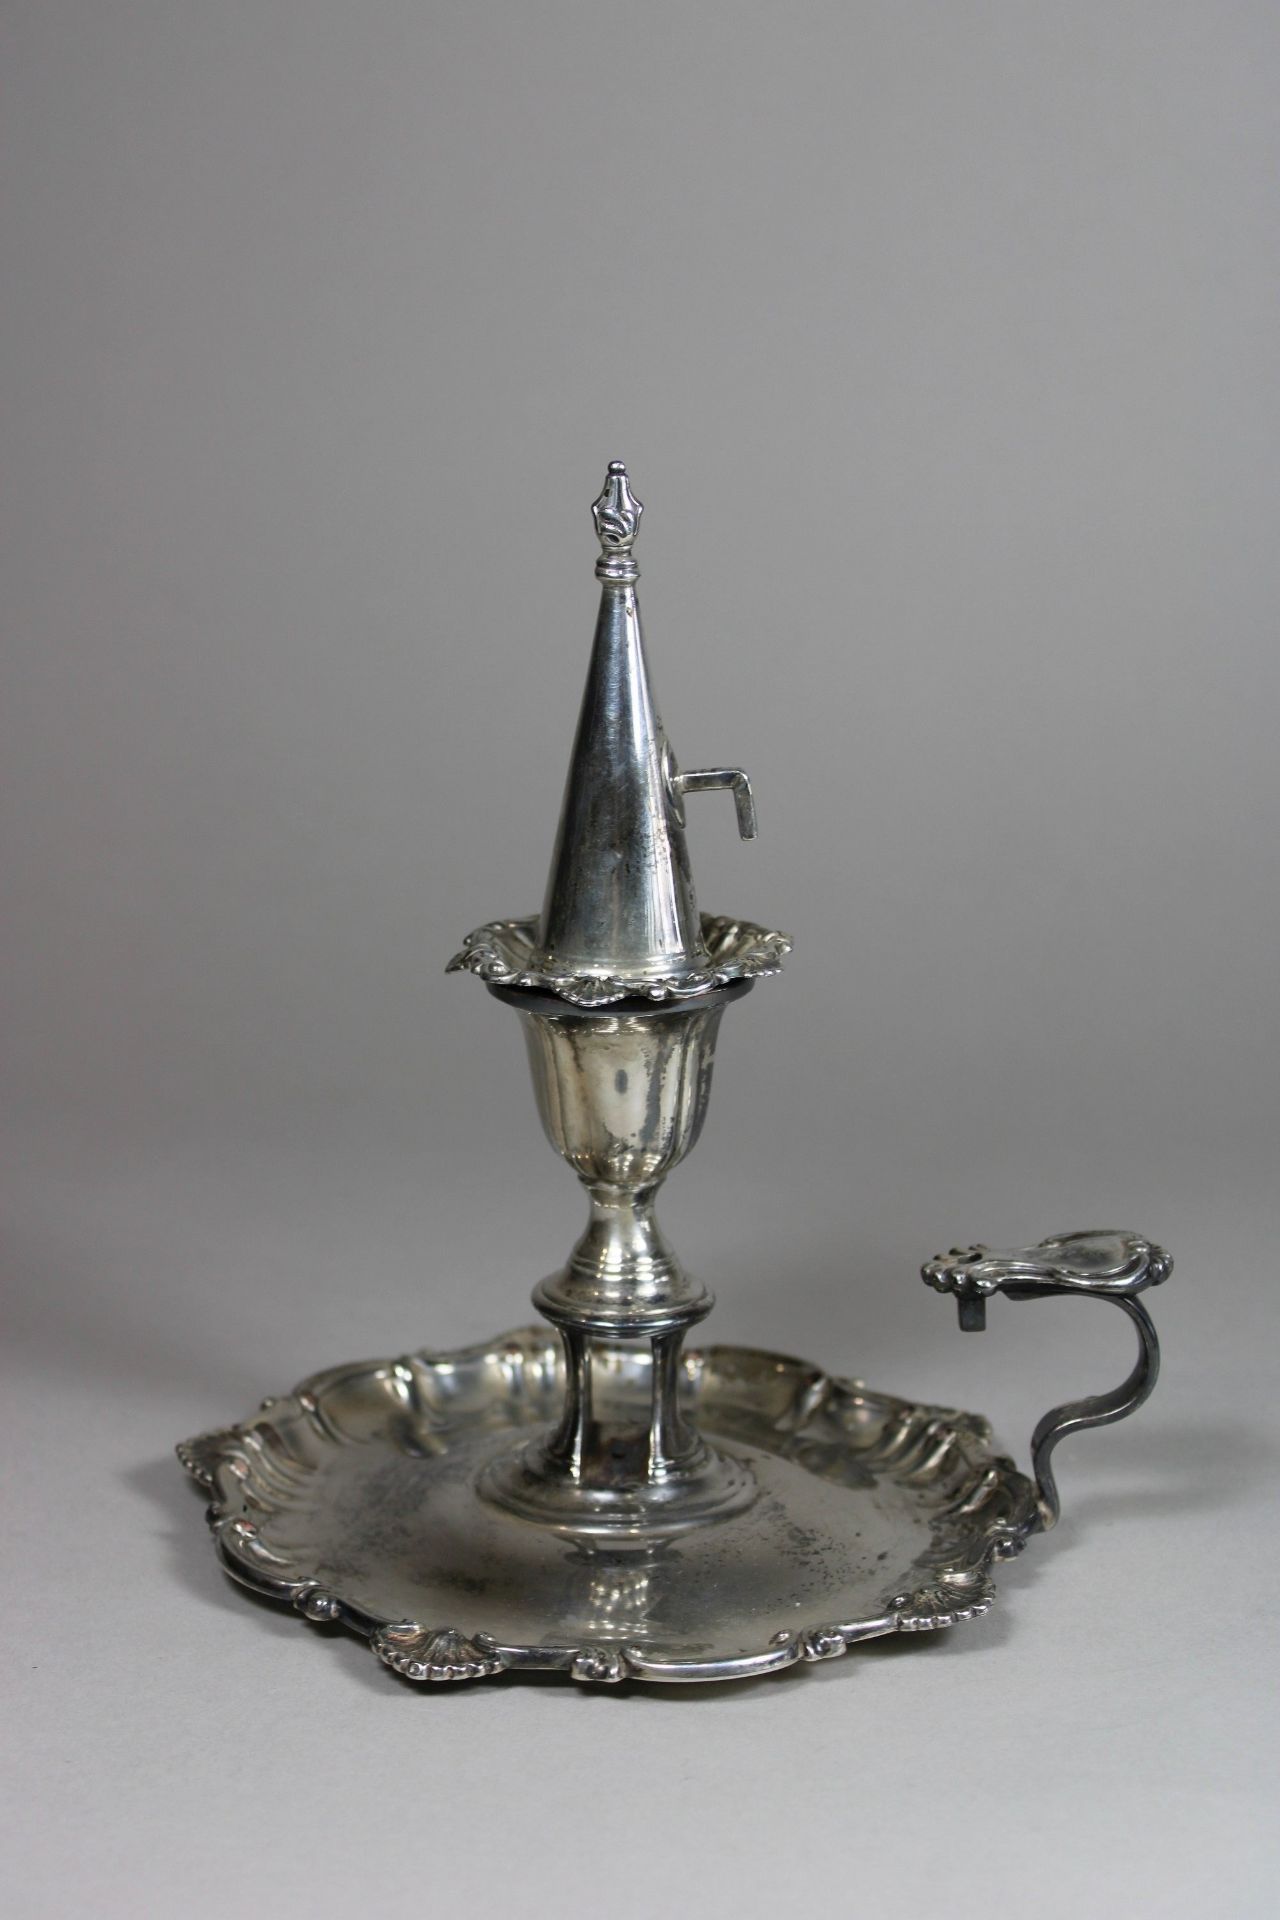 Kerzenleuchter mit Snuffer, Silber, England, H.: 11,5 cm, Gewicht: 279 g. Guter, altersbedingter Zu - Bild 2 aus 3